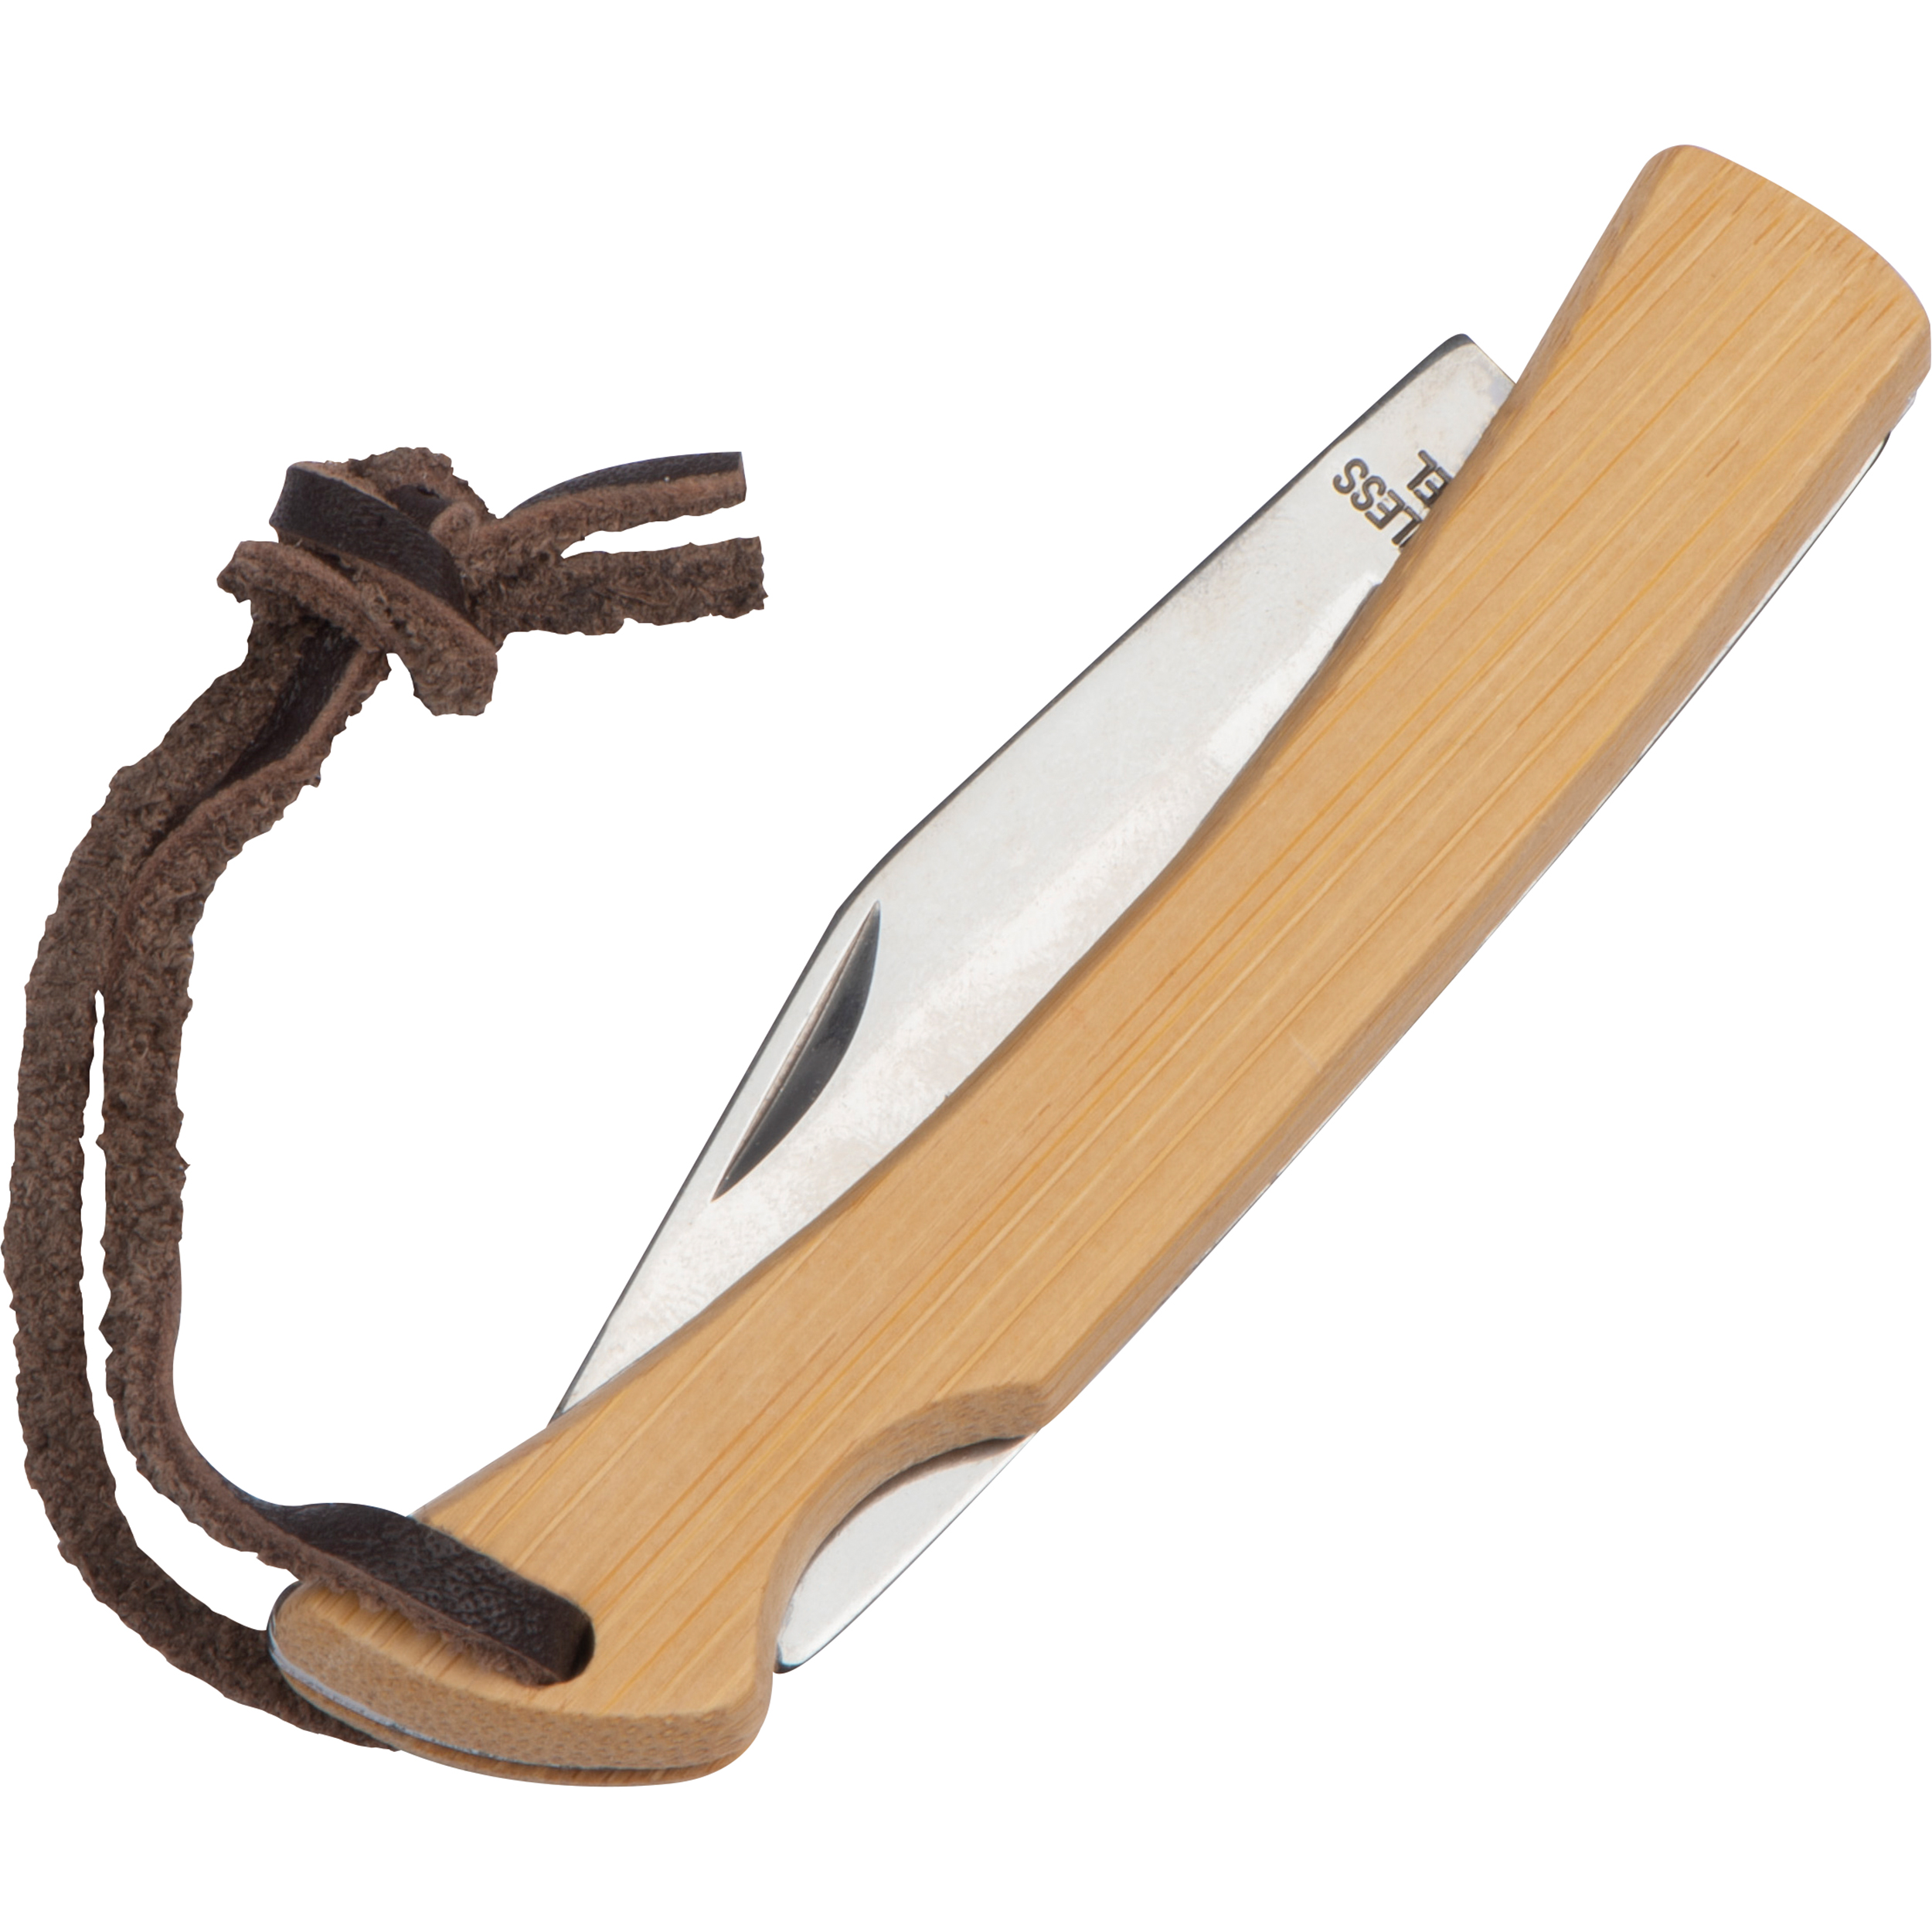 Pocket knife with bamboo bowls and hanging loop